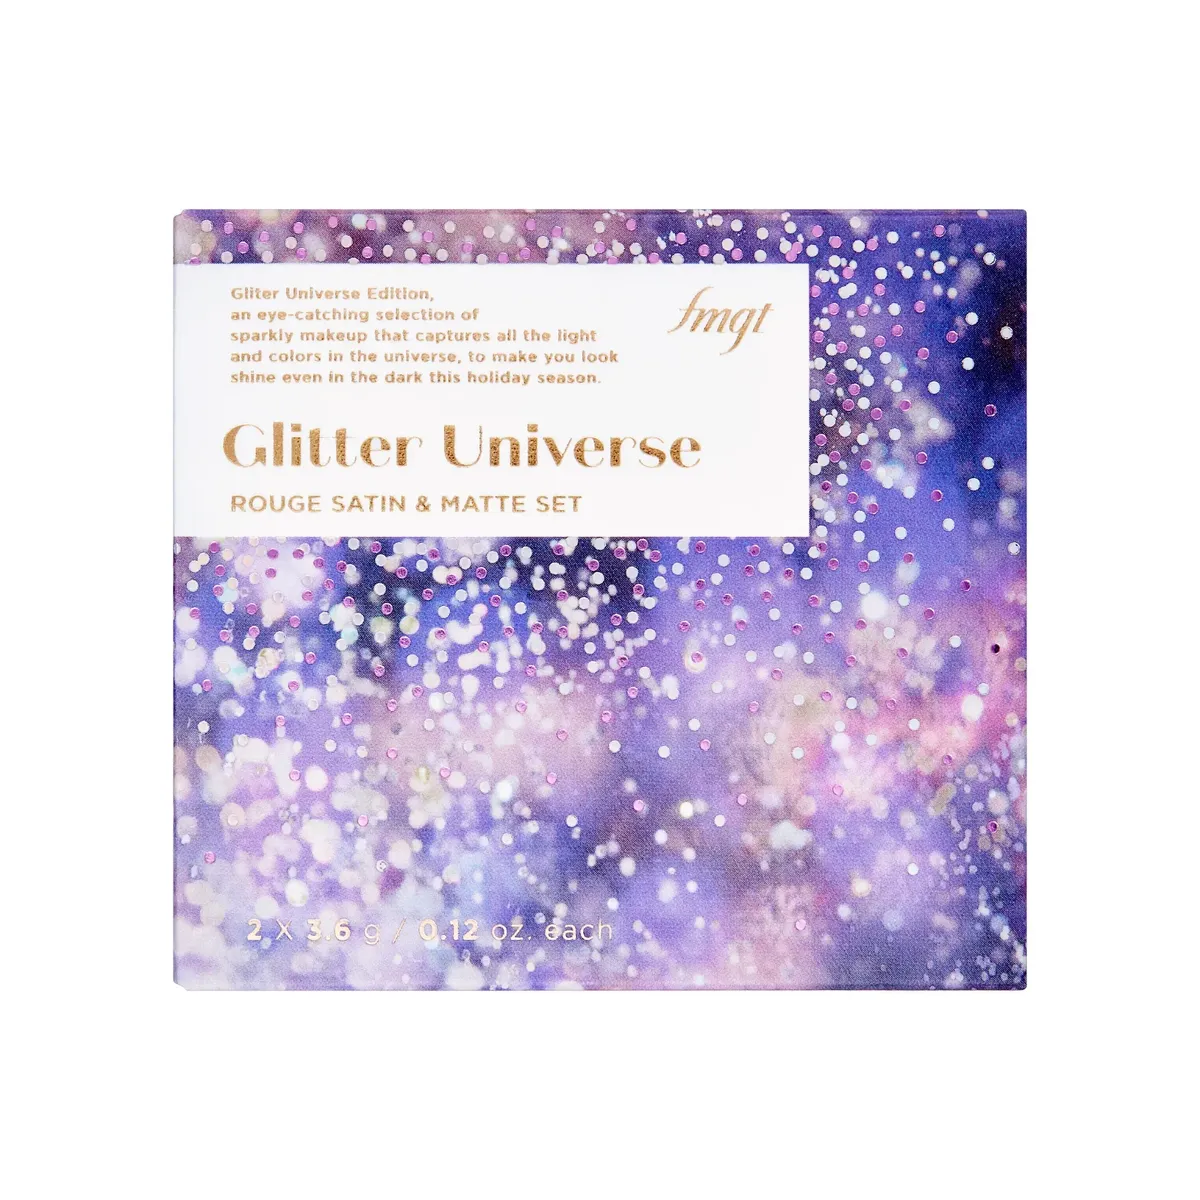 gliter-universe-edition-set-son-li-thefaceshop-rouge-satin-matte-set-01-red-universe-3-6gx2-2